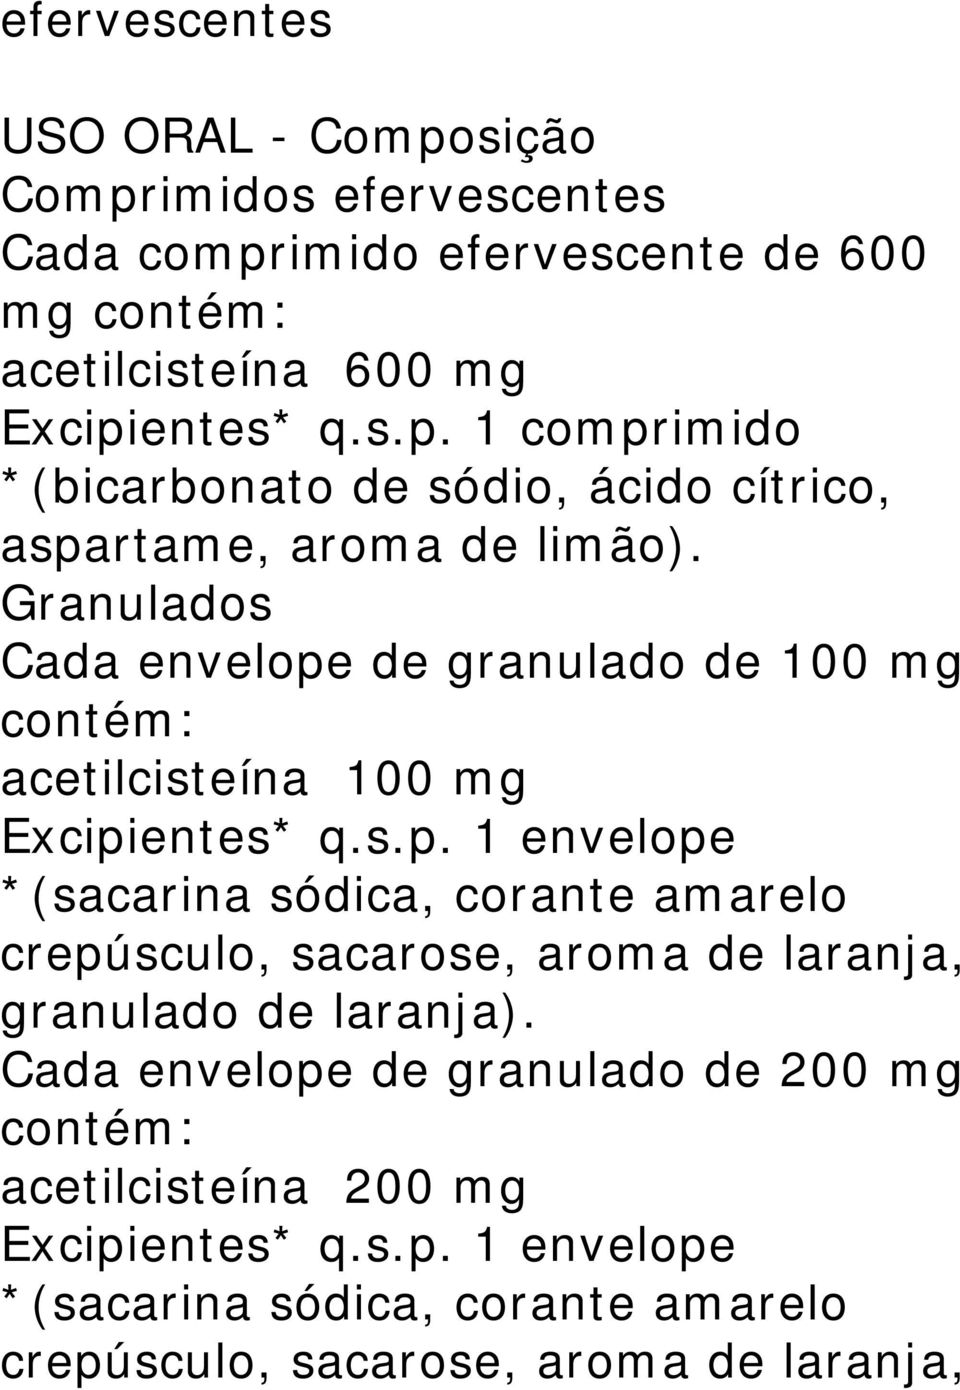 Cada envelope de granulado de 200 mg contém: acetilcisteína 200 mg Excipientes* q.s.p. 1 envelope *(sacarina sódica, corante amarelo crepúsculo, sacarose, aroma de laranja,